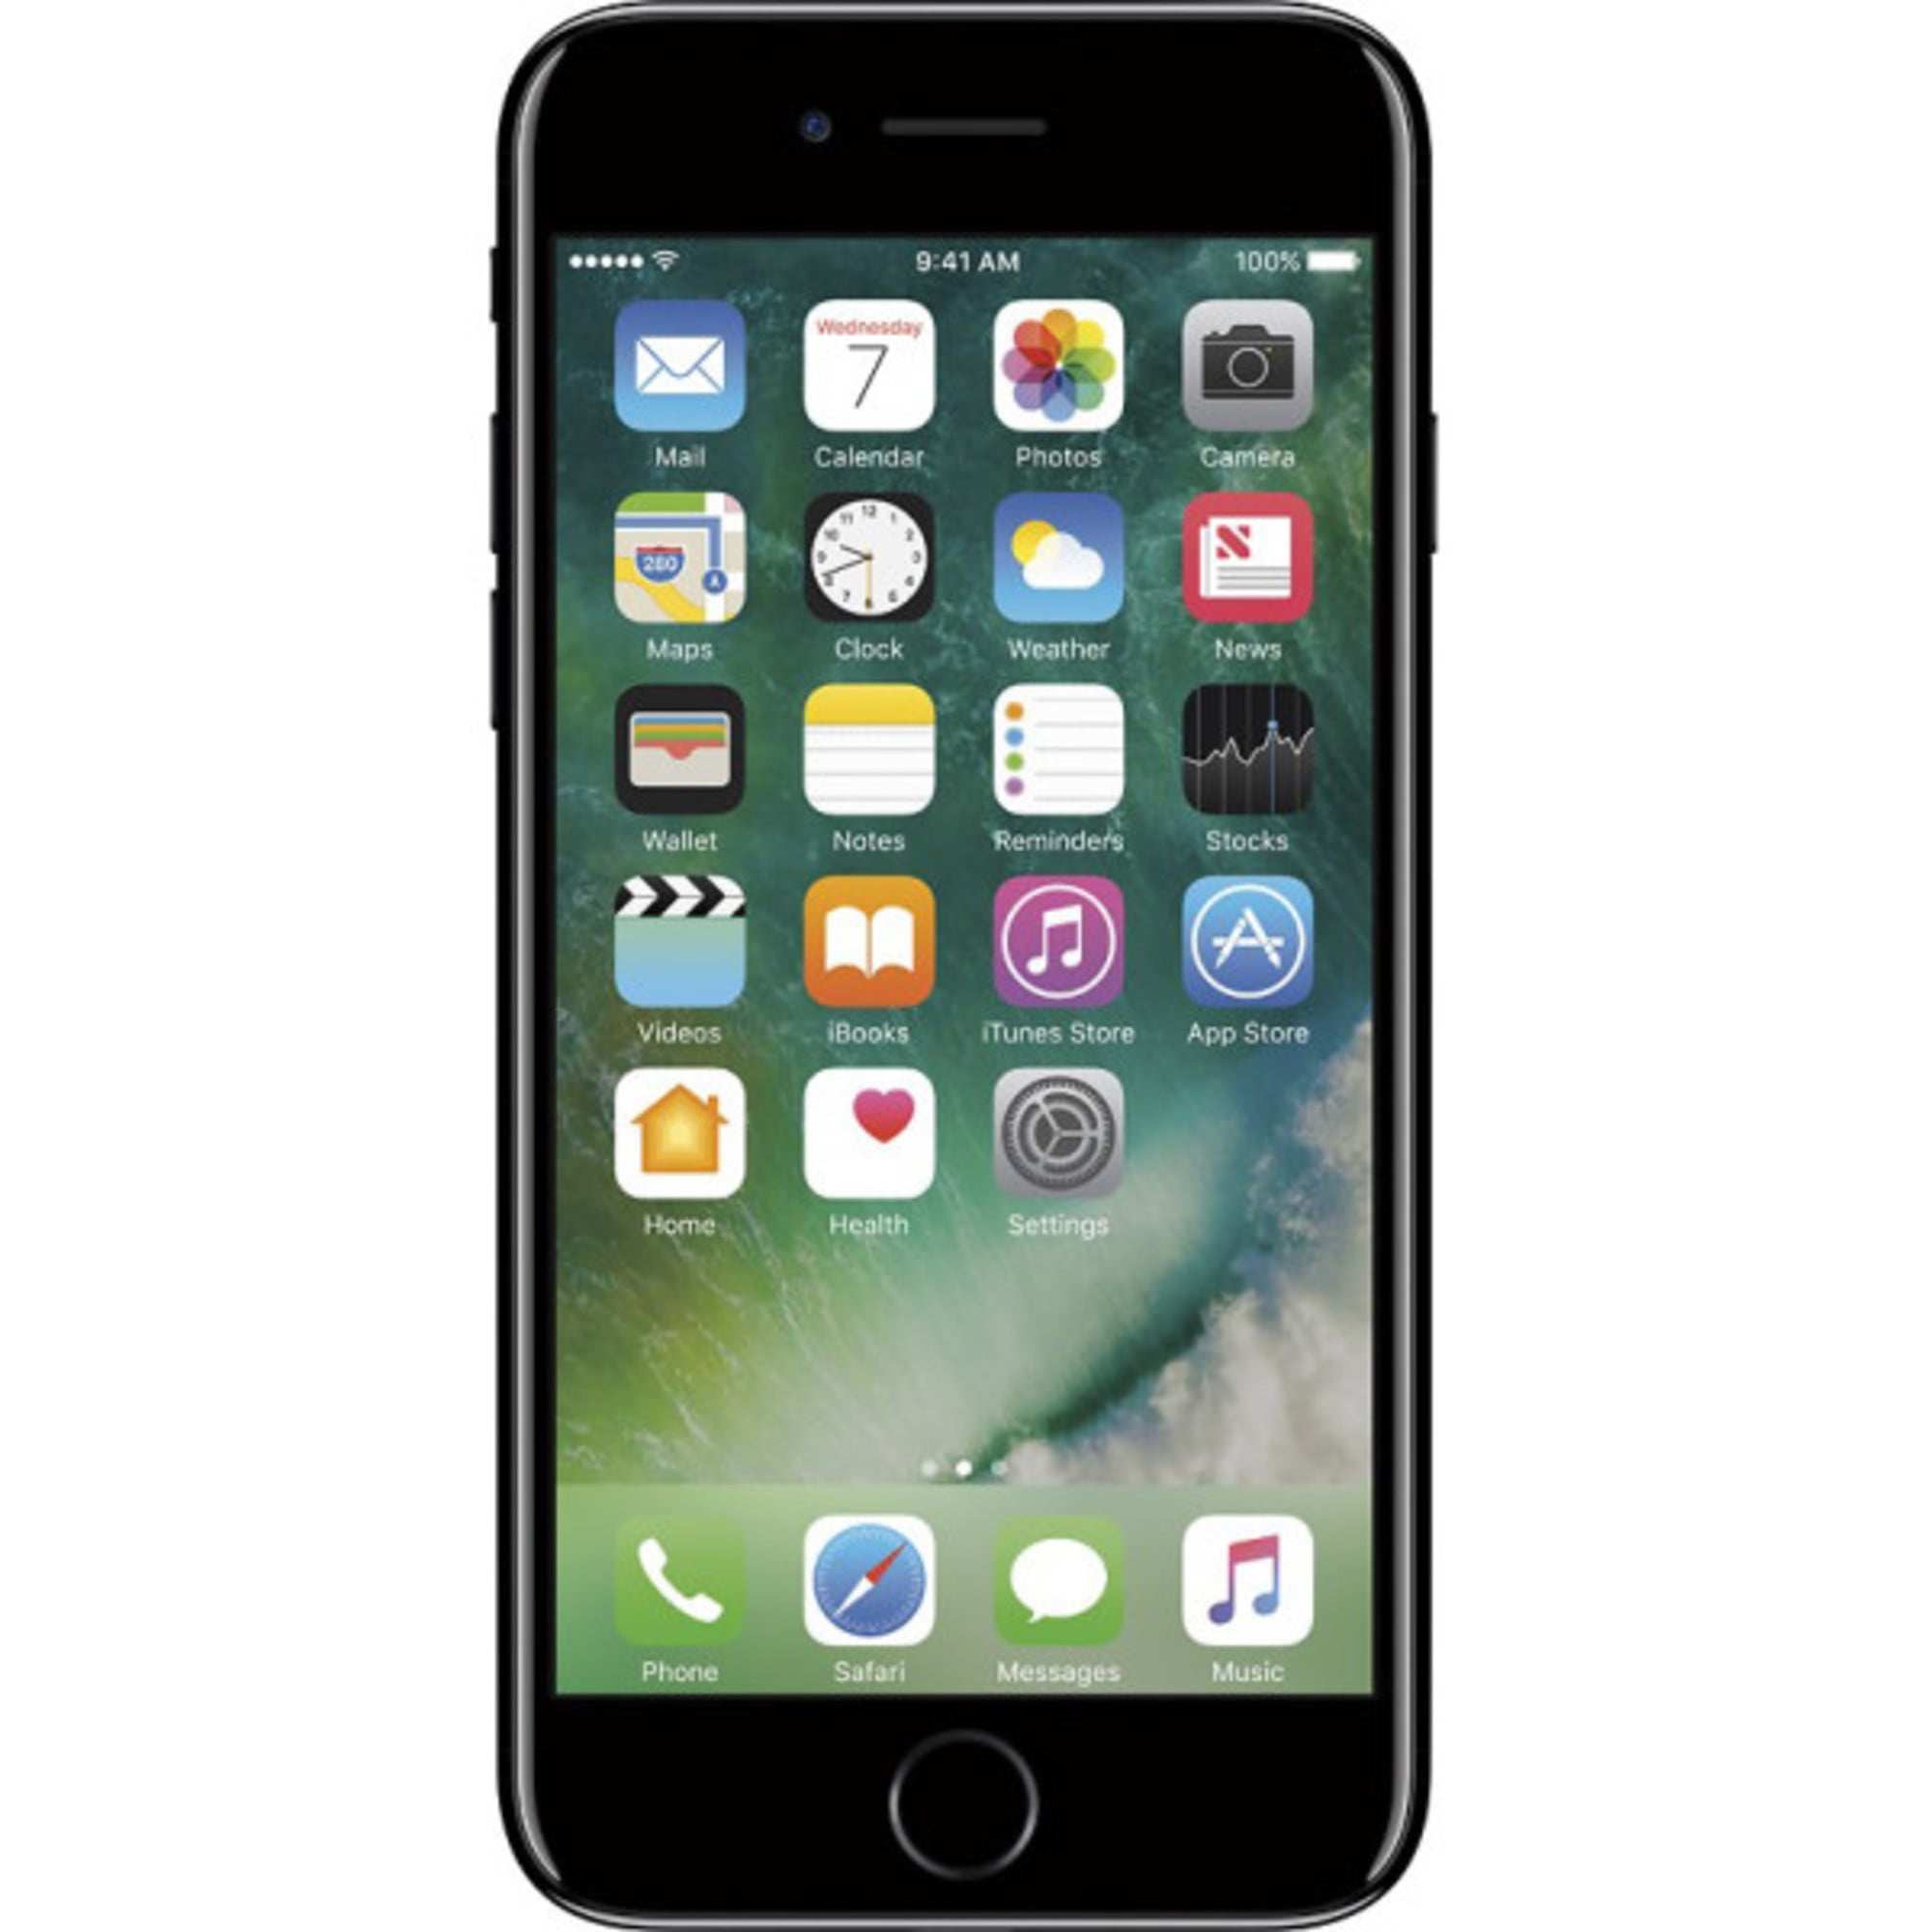 Apple iPhone 7 128GB Unlocked (GSM, not CDMA), RED - Used 